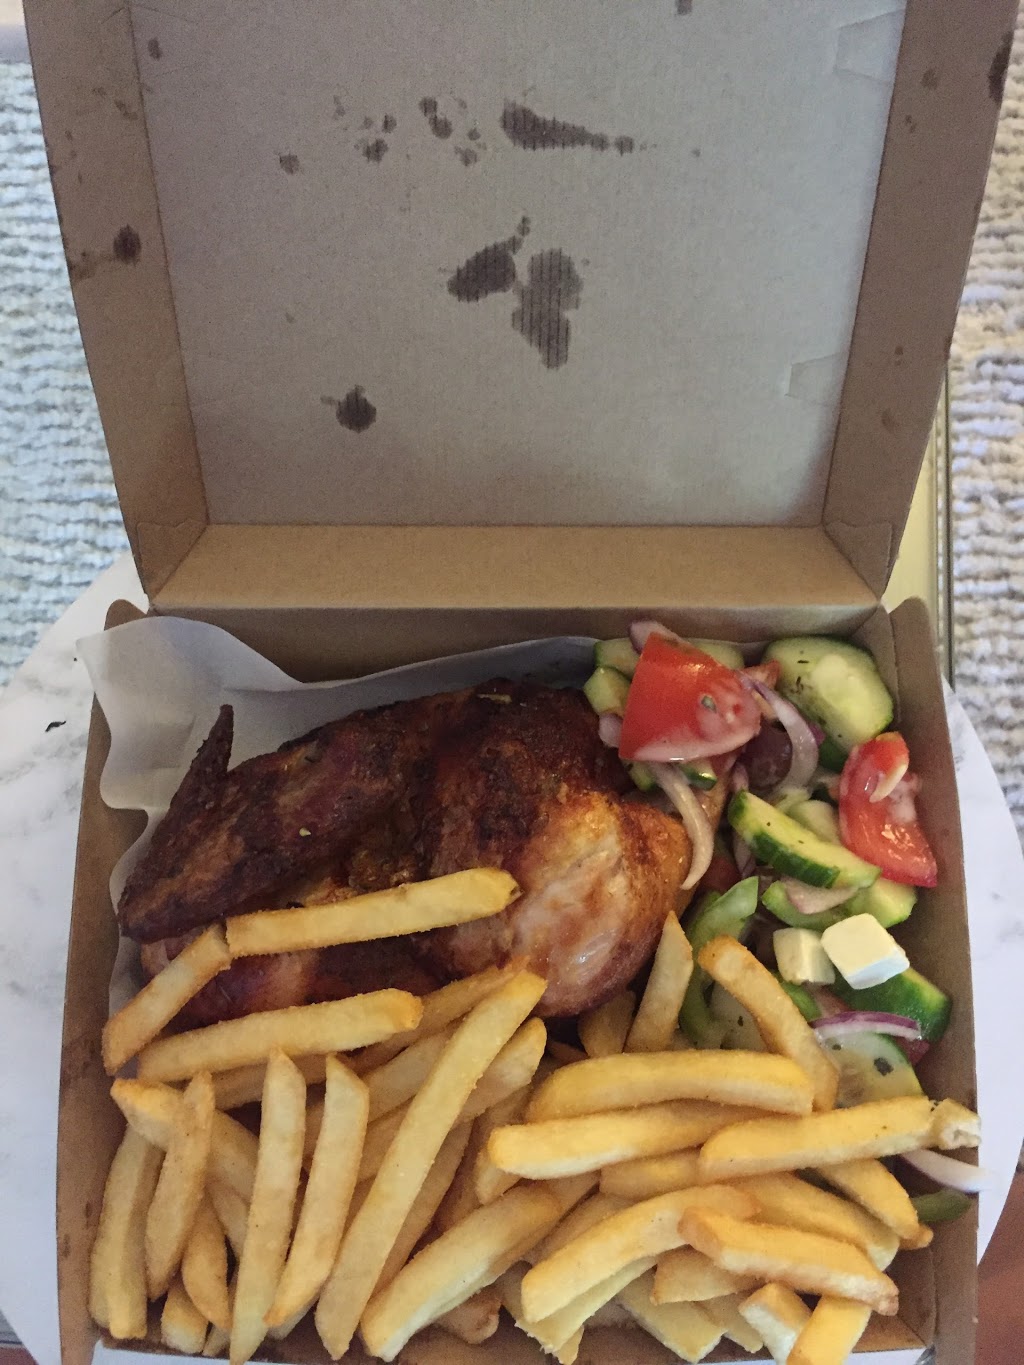 Jacks Charcoal Chicken | restaurant | 4/51 Military Rd, Avondale Heights VIC 3034, Australia | 0393182716 OR +61 3 9318 2716